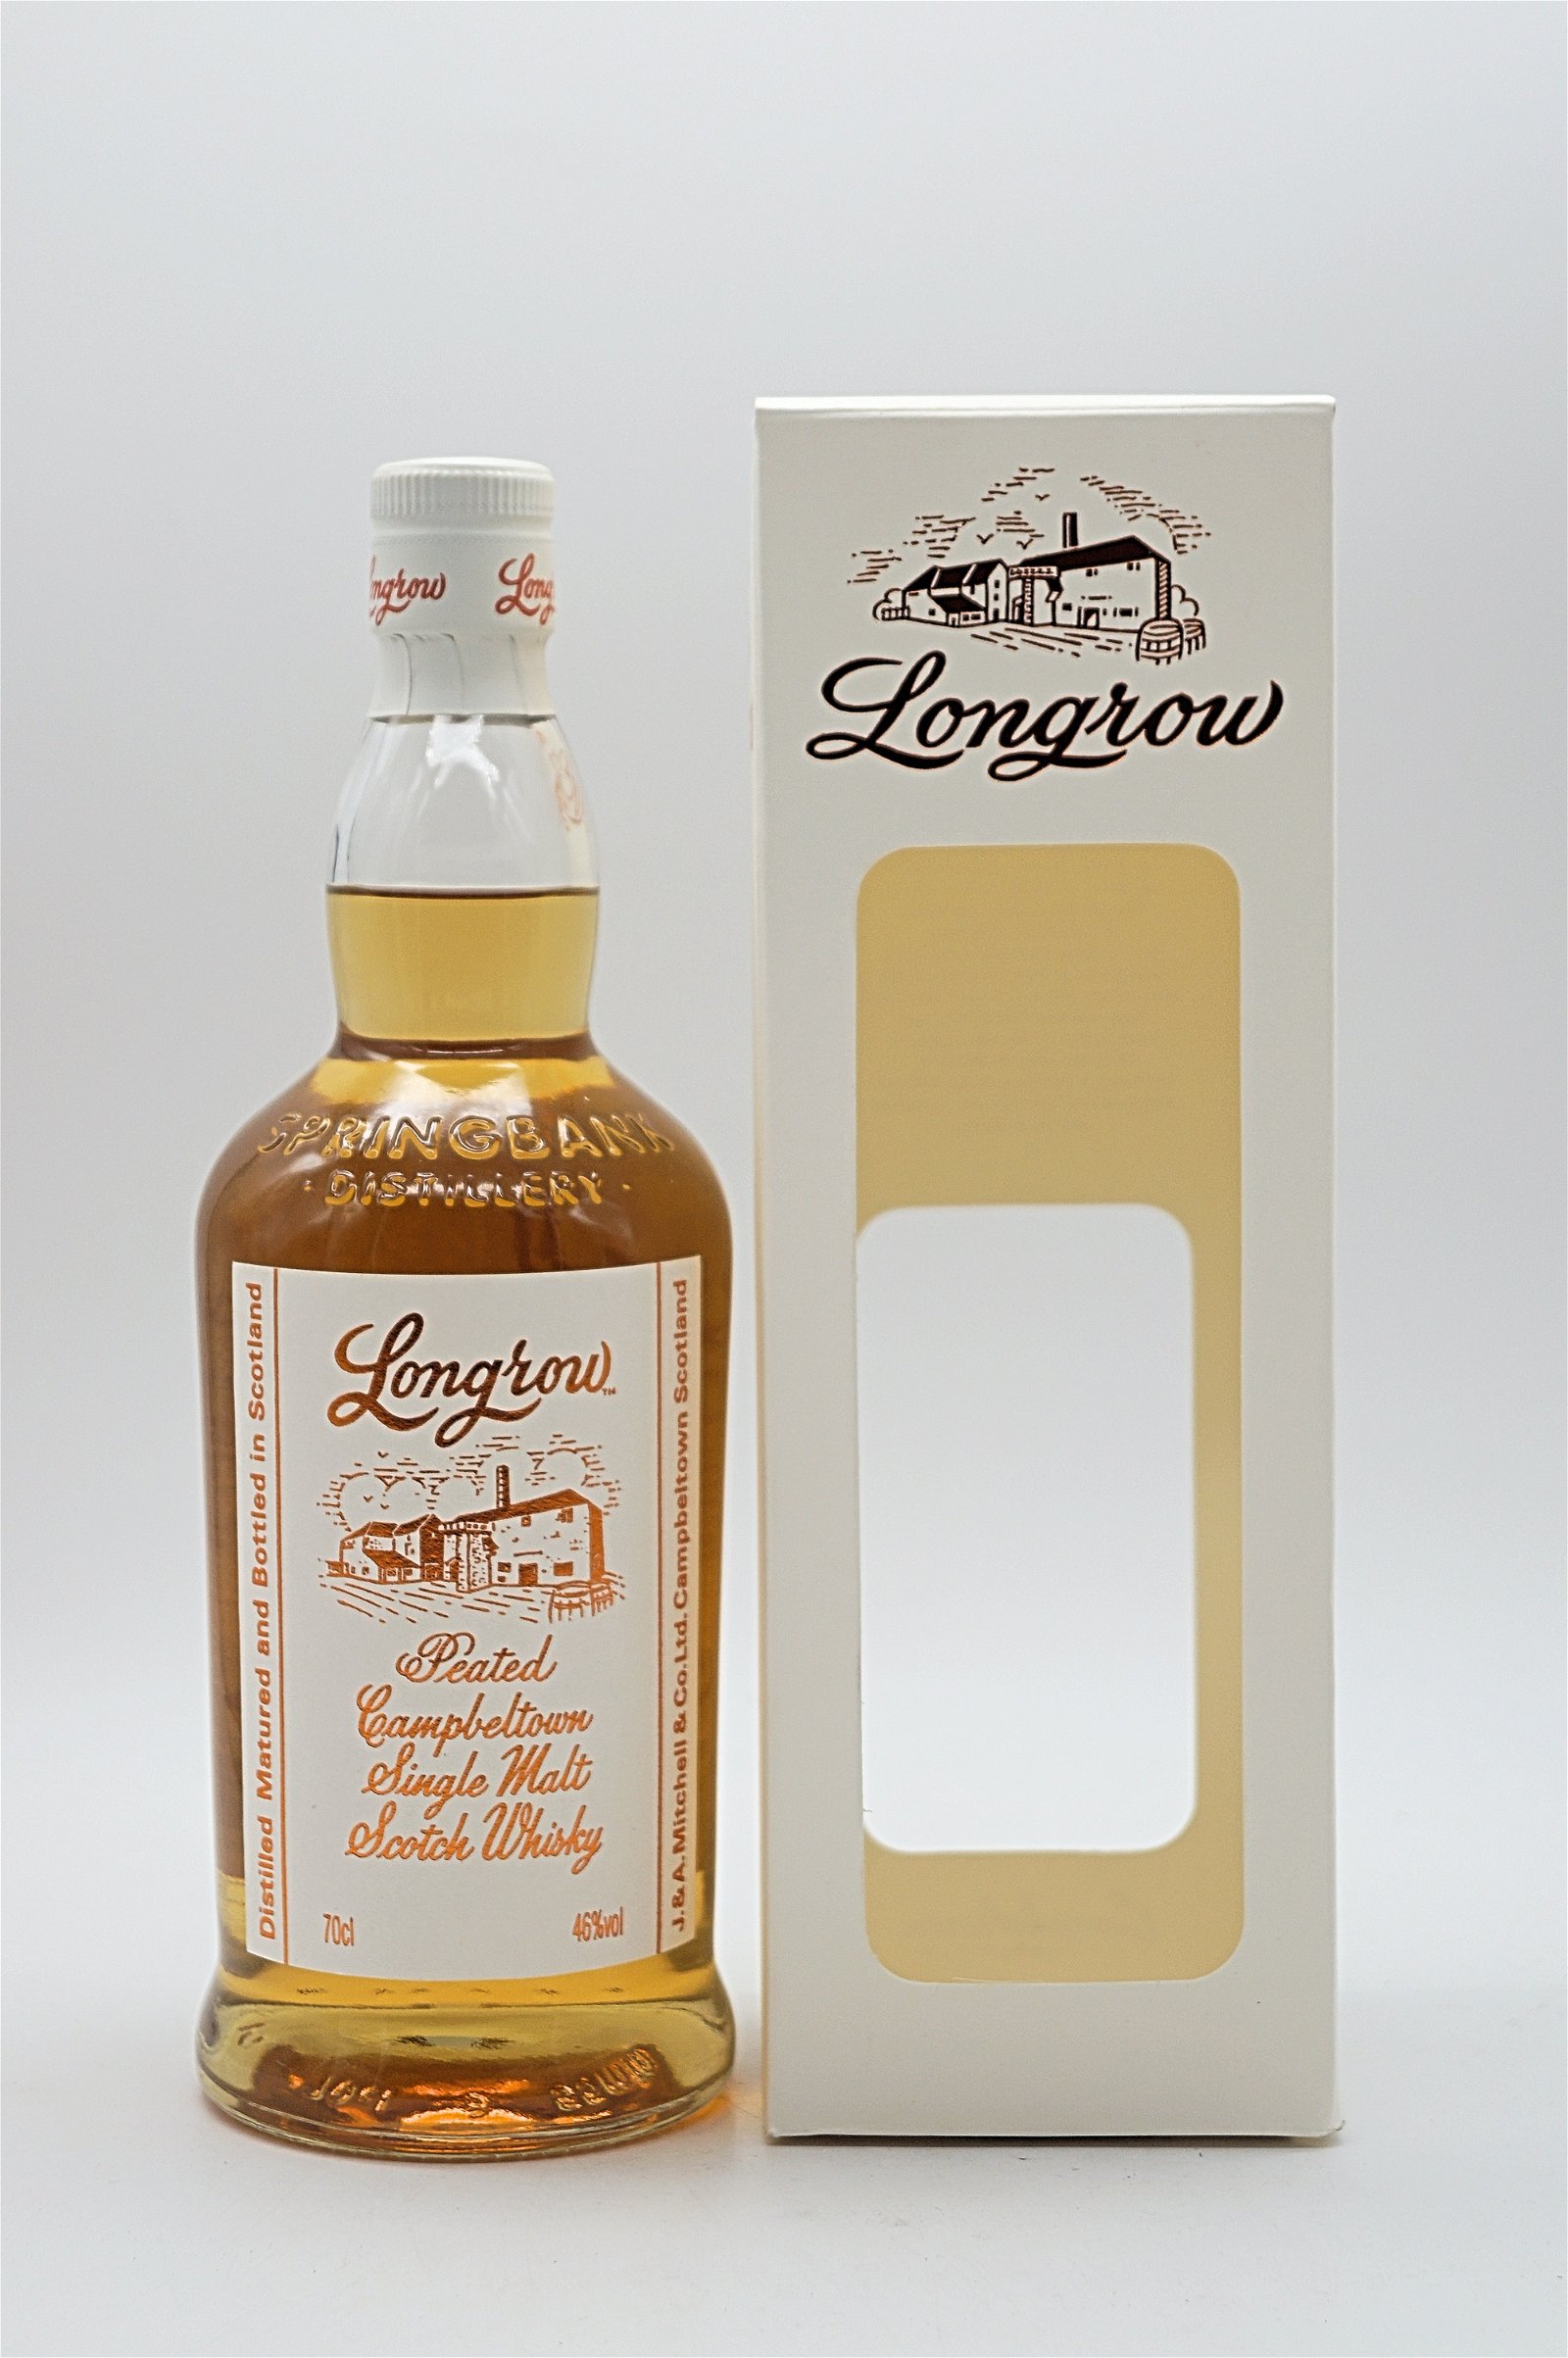 Longrow Peated Campletown Single Malt Scotch WhiskyLongrow Peated Campletown Single Malt Scotch Whisky